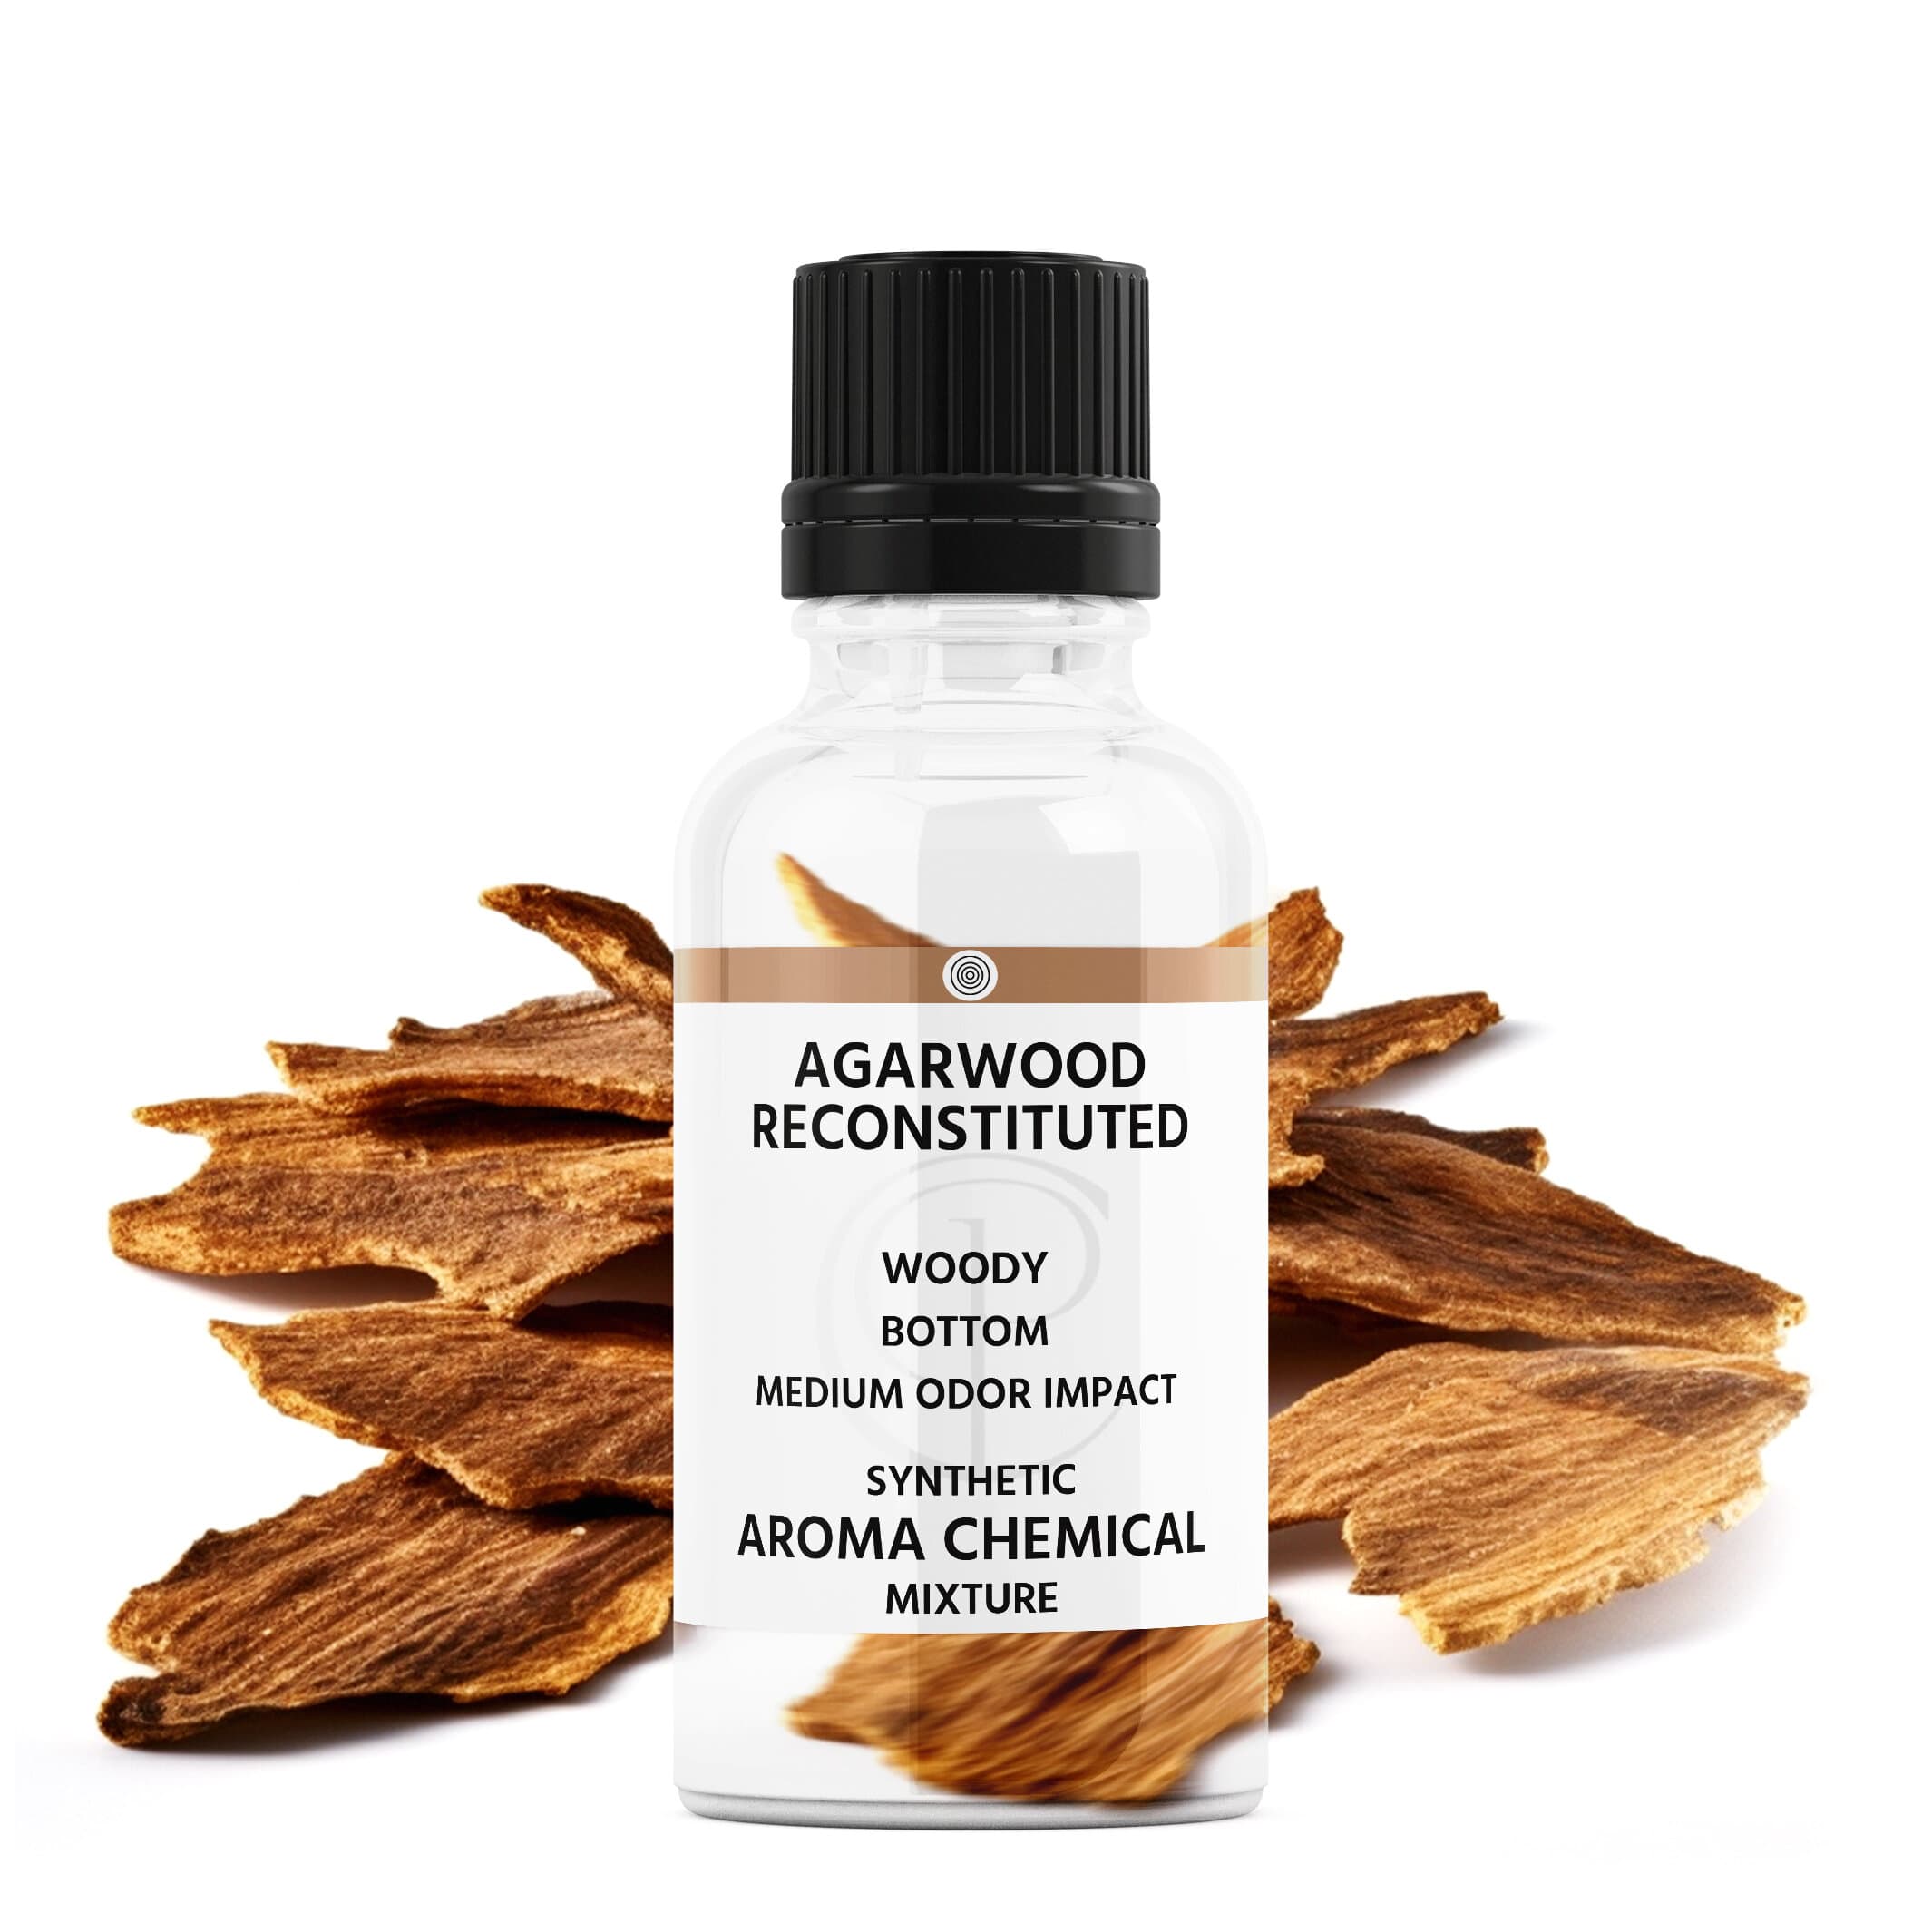 AGARWOOD RECONSTITUTED – Creating Perfume